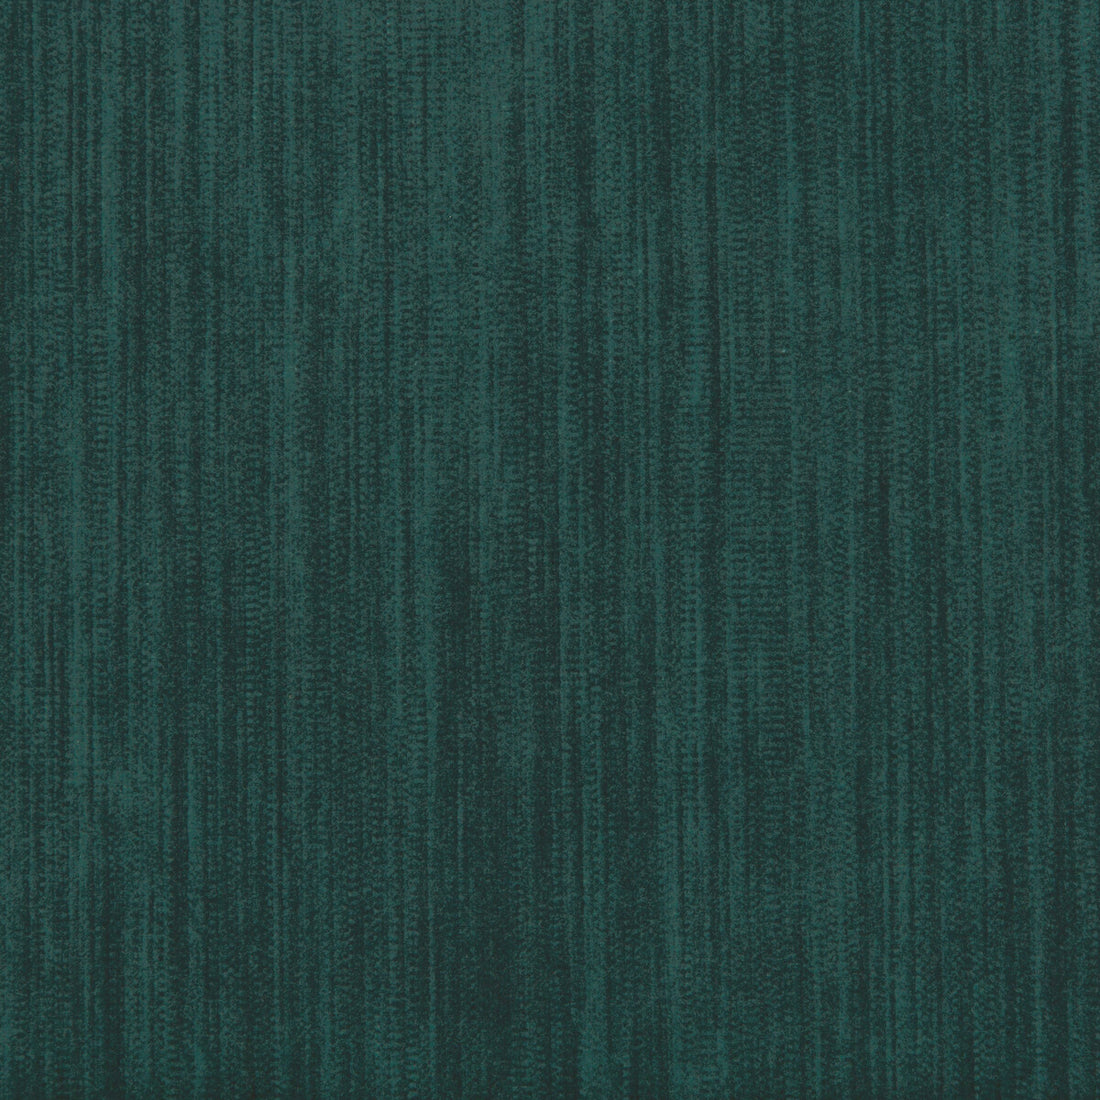 Barnwell Velvet fabric in aegean color - pattern 2020180.35.0 - by Lee Jofa in the Barnwell Velvet collection